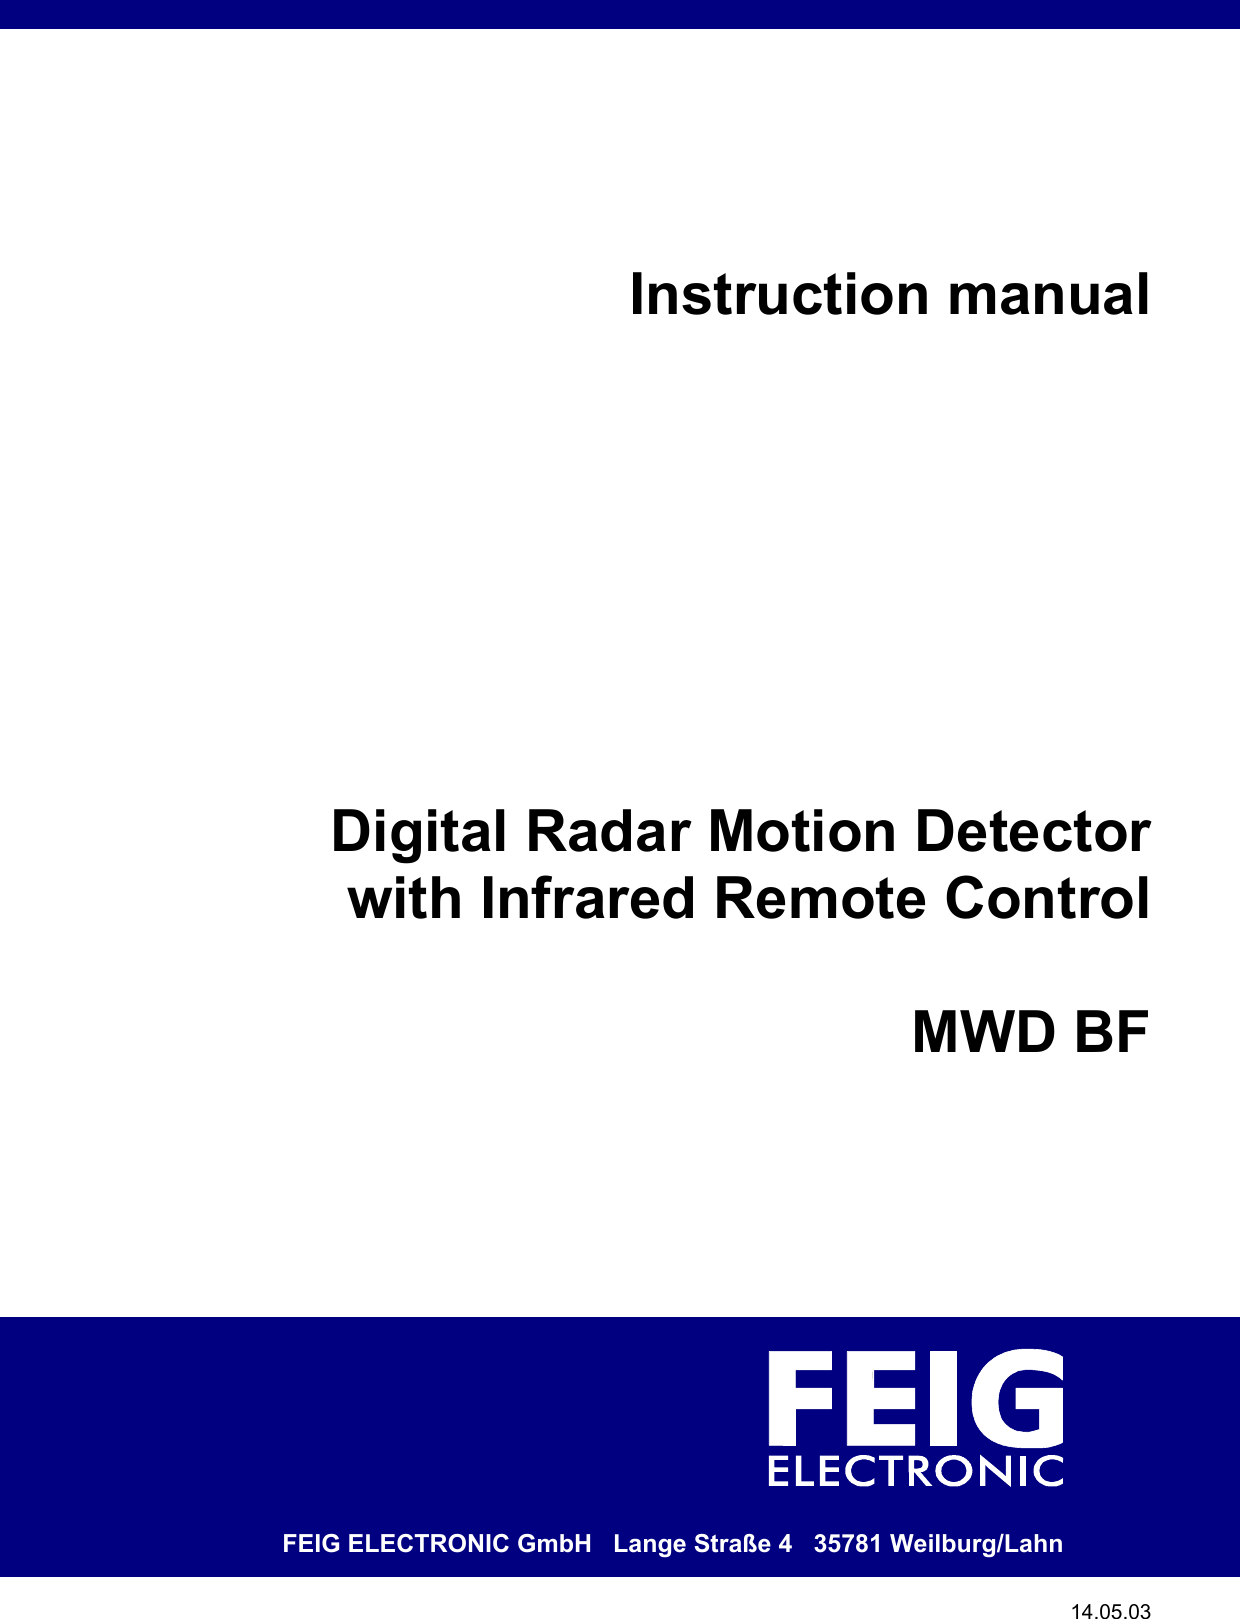 14.05.03Instruction manualDigital Radar Motion Detectorwith Infrared Remote ControlMWD BFFEIG ELECTRONIC GmbH   Lange Straße 4   35781 Weilburg/Lahn